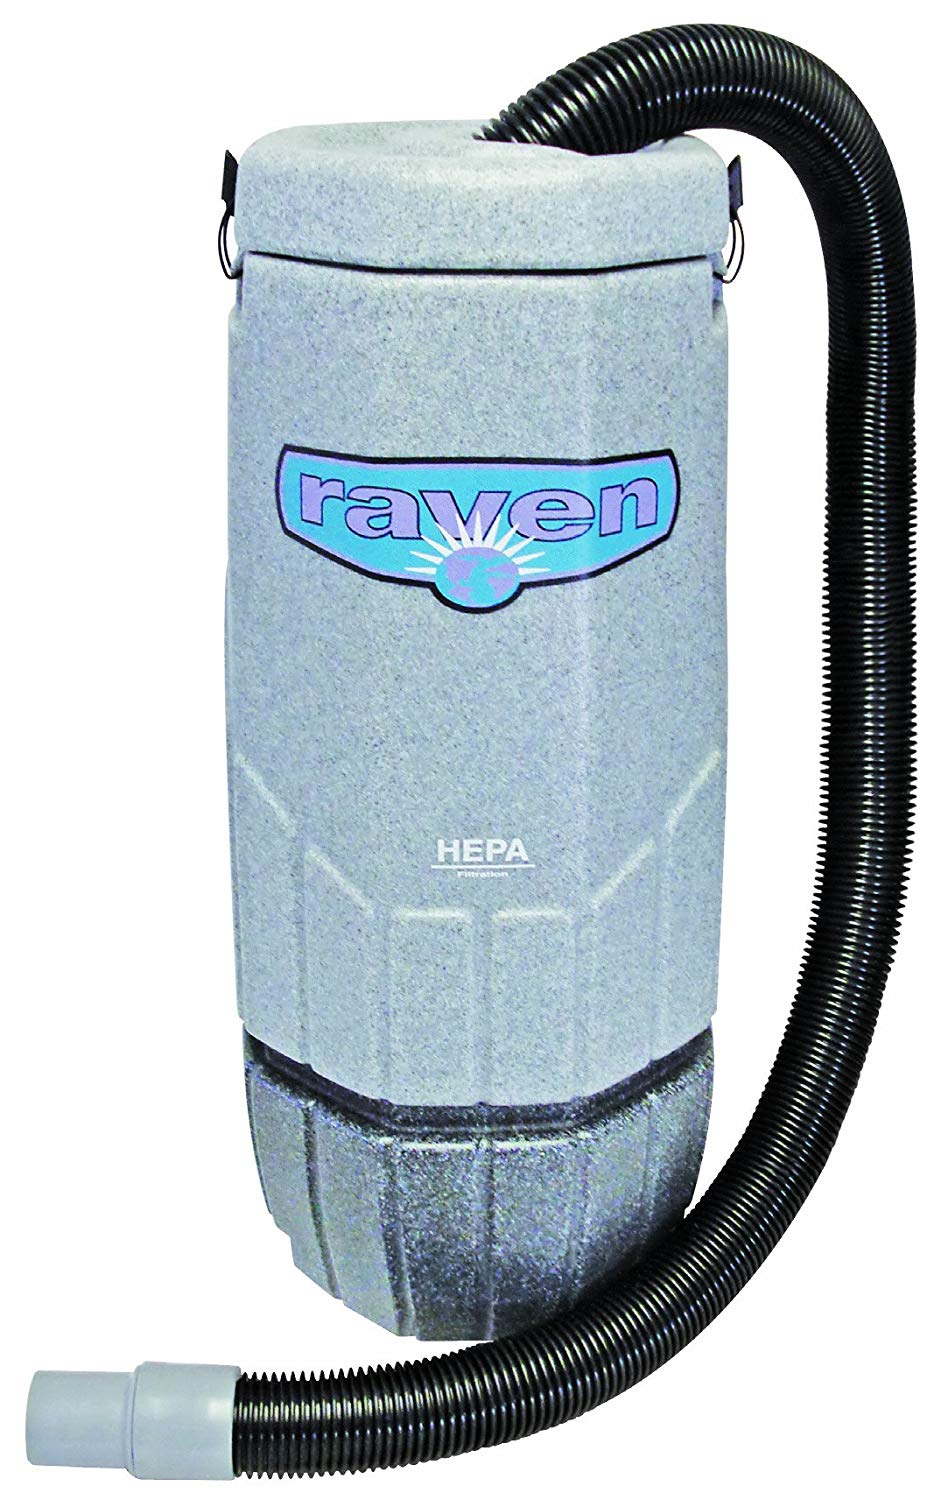 Sandia 20-3001 HEPA Raven Commercial Backpack Vacuum with 5 Piece Standard Tool Kit, 10 Quart Capacity - CalCleaningEquipment